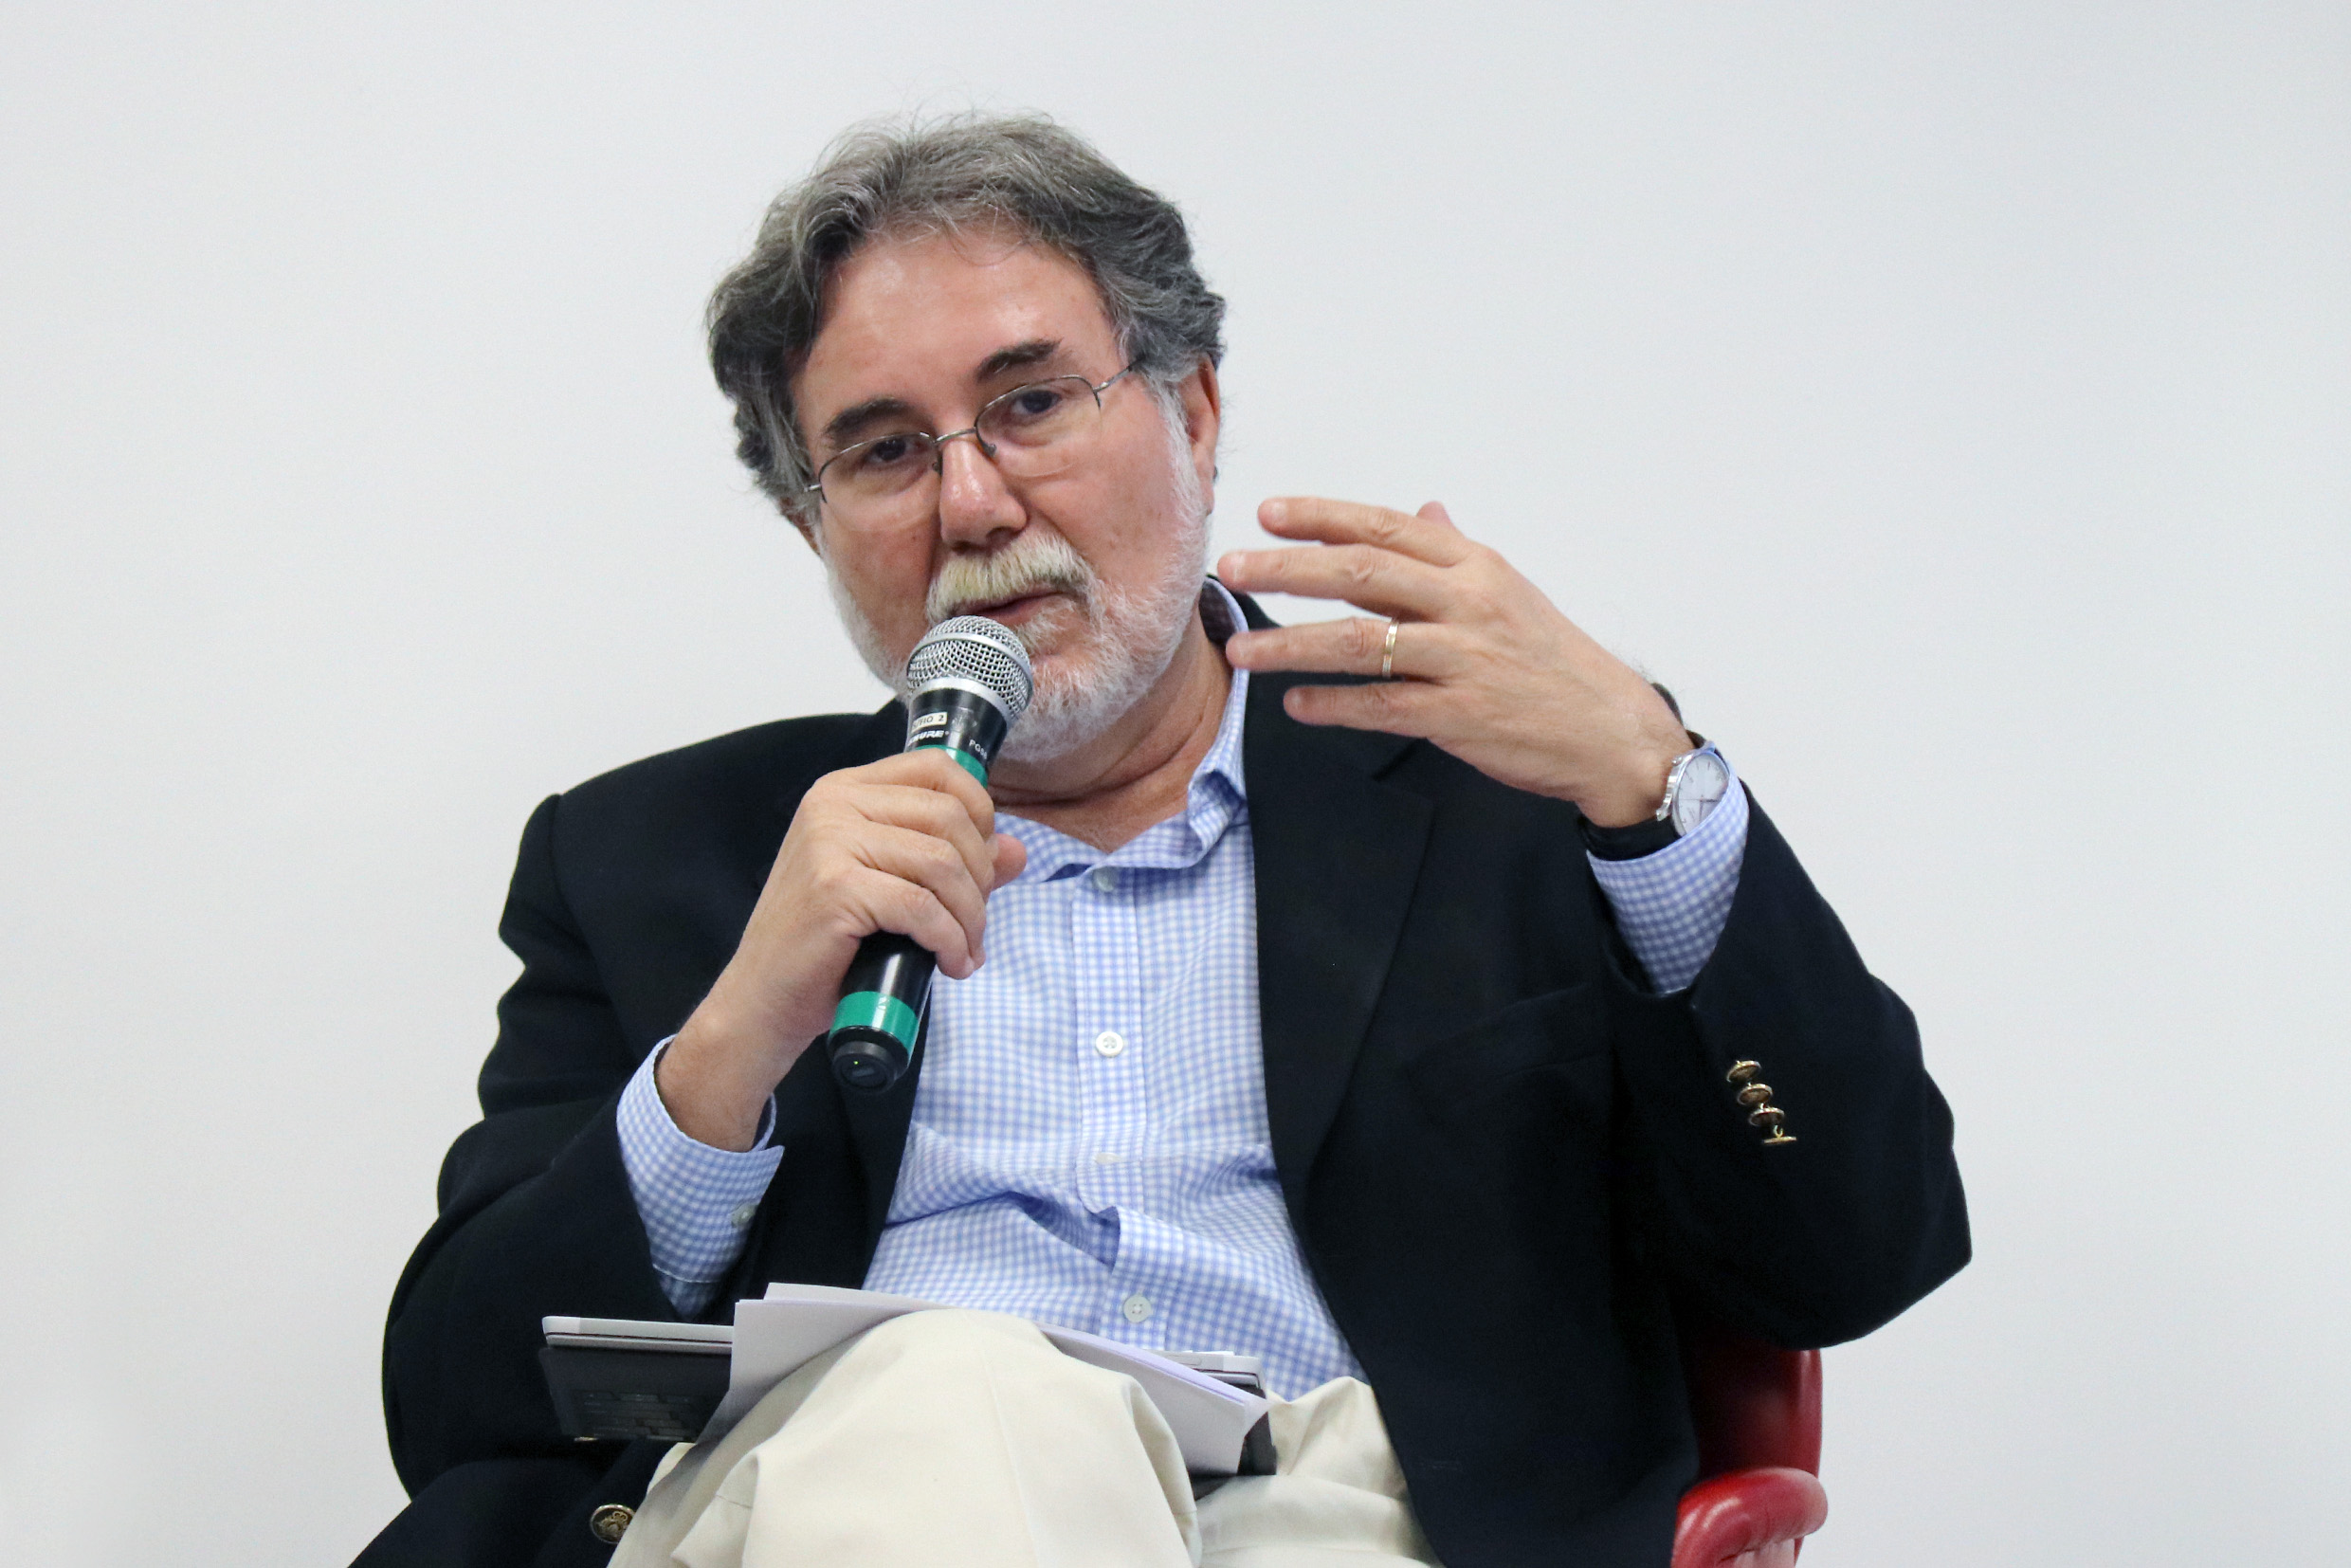 Carlos Américo Pacheco